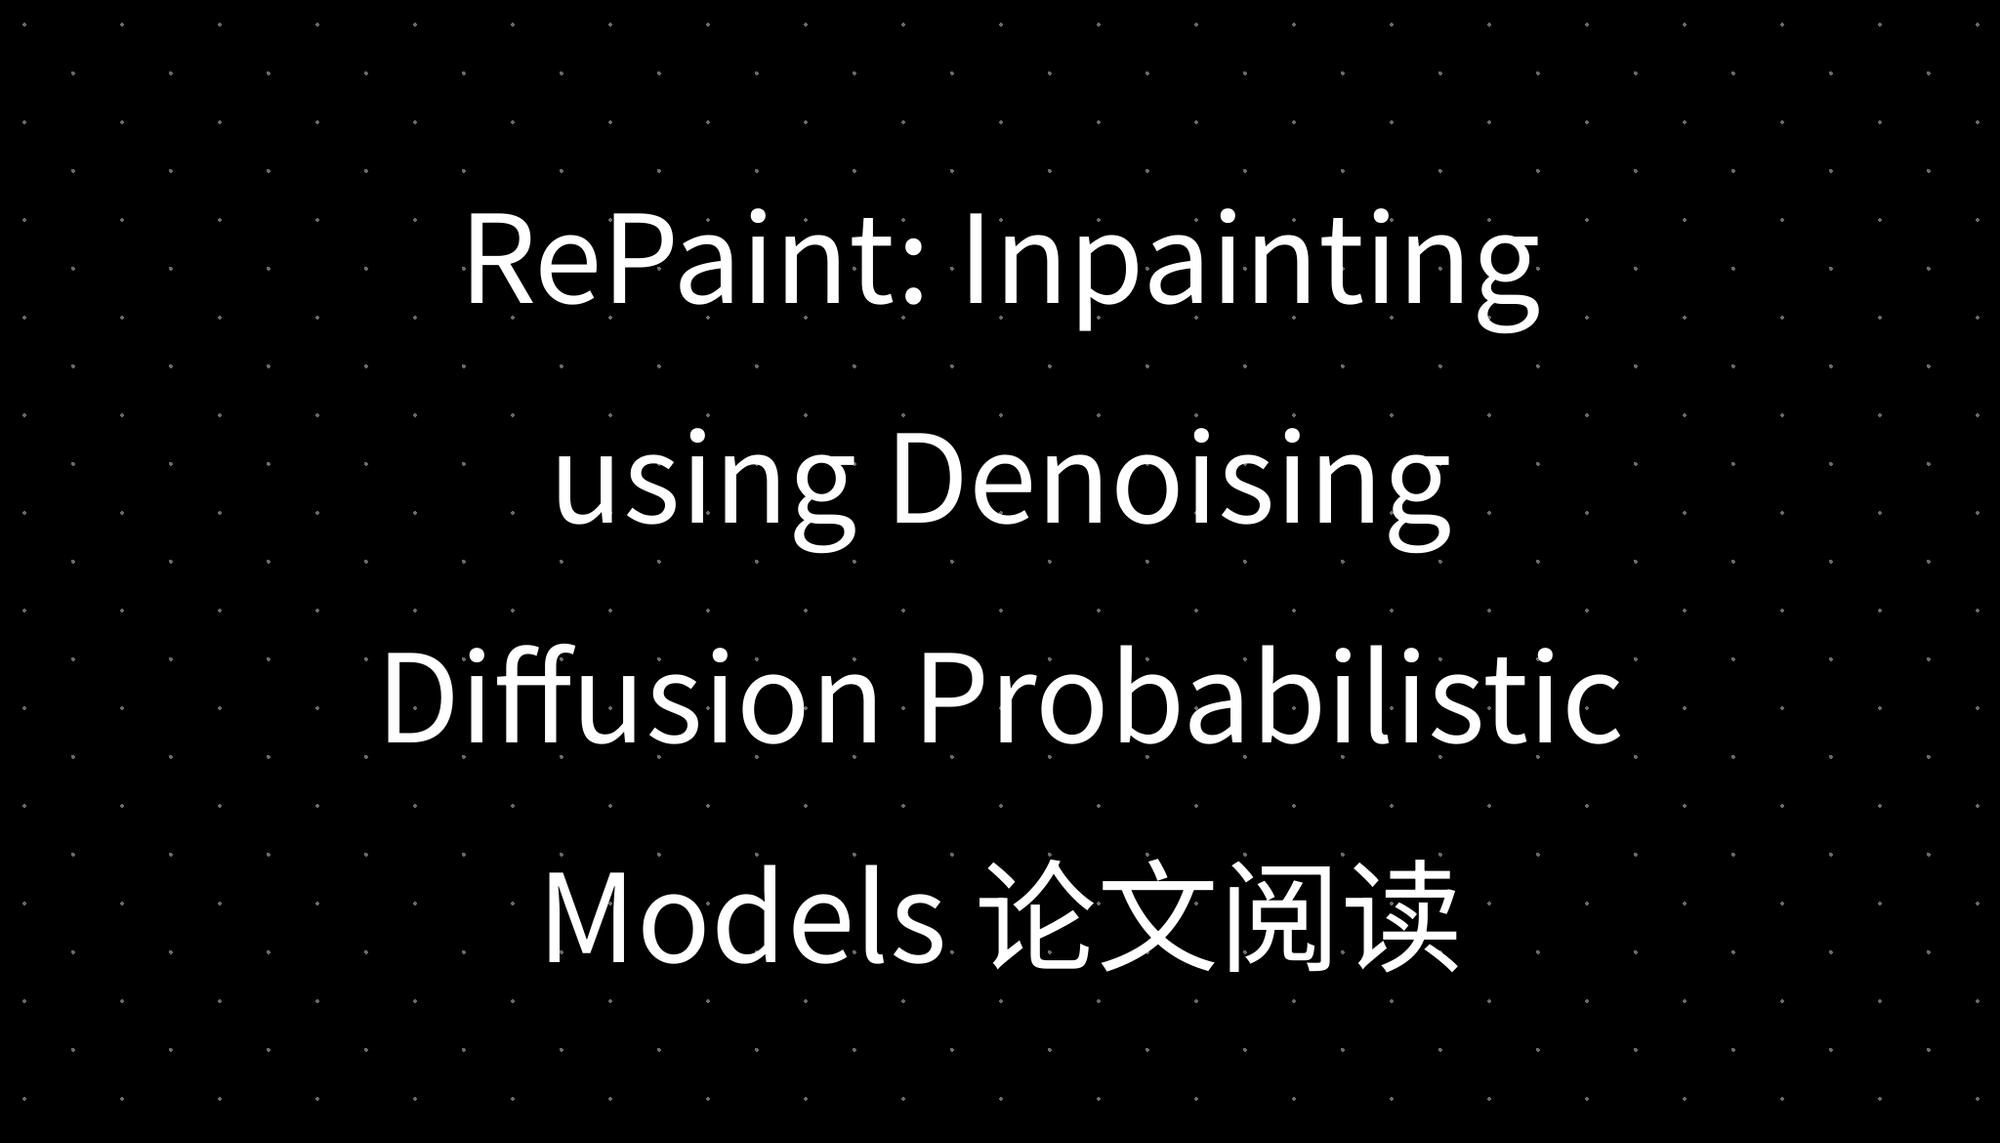 RePaint: Inpainting using Denoising Diffusion Probabilistic Models 论文阅读